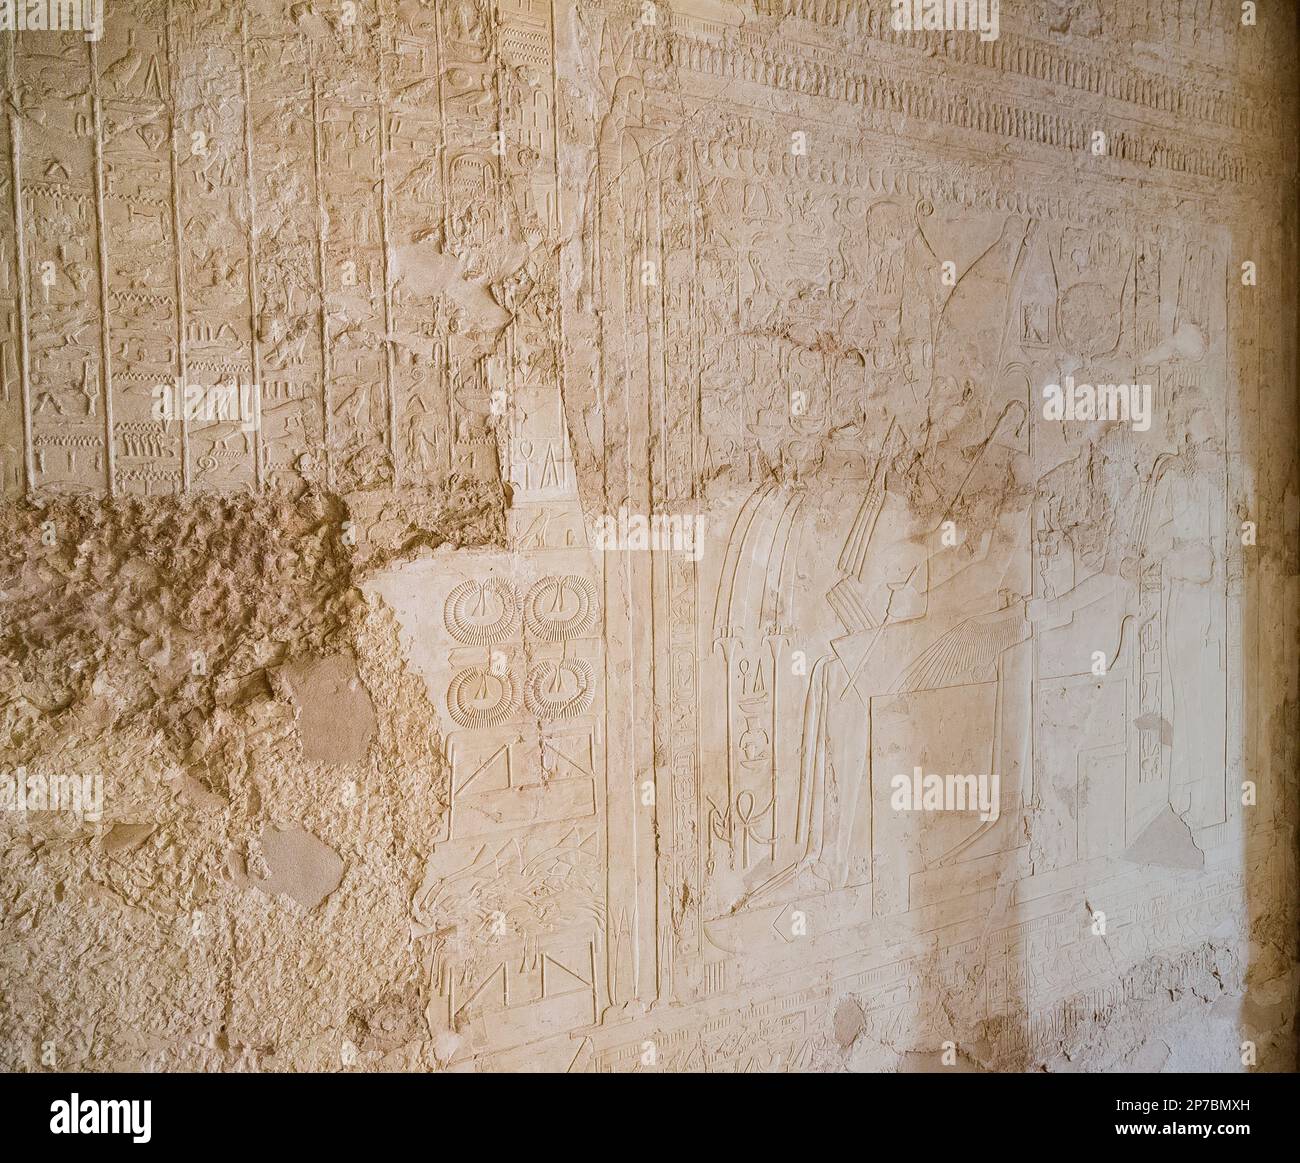 Louxor en Egypte, tombe de Kheruef, premier jubilé (Heb SED) d'Amenhotep III Banque D'Images